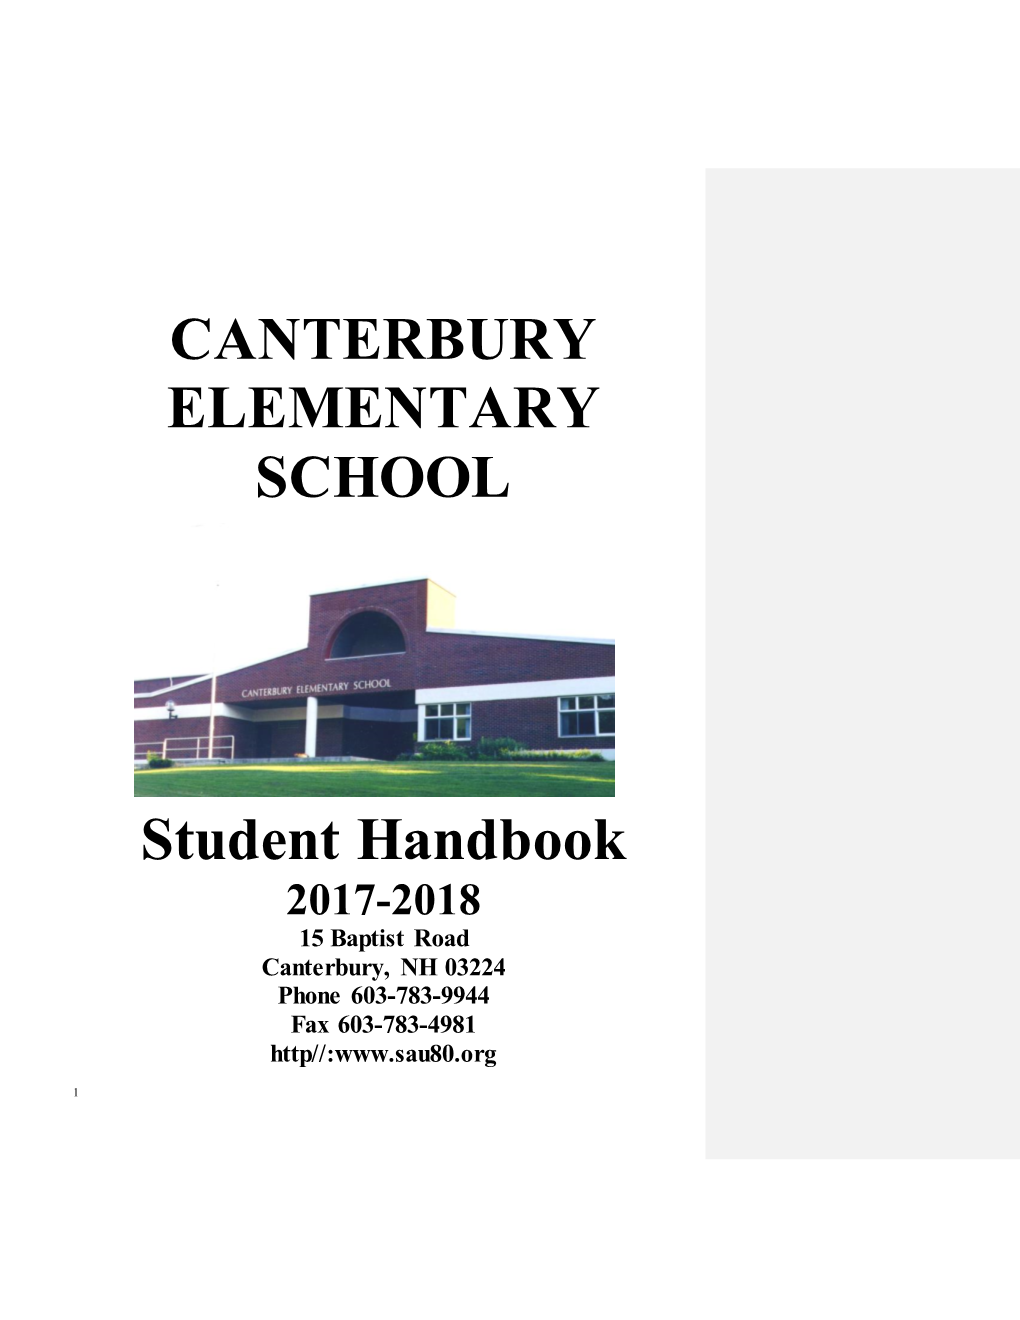 CANTERBURY ELEMENTARY SCHOOL Student Handbook